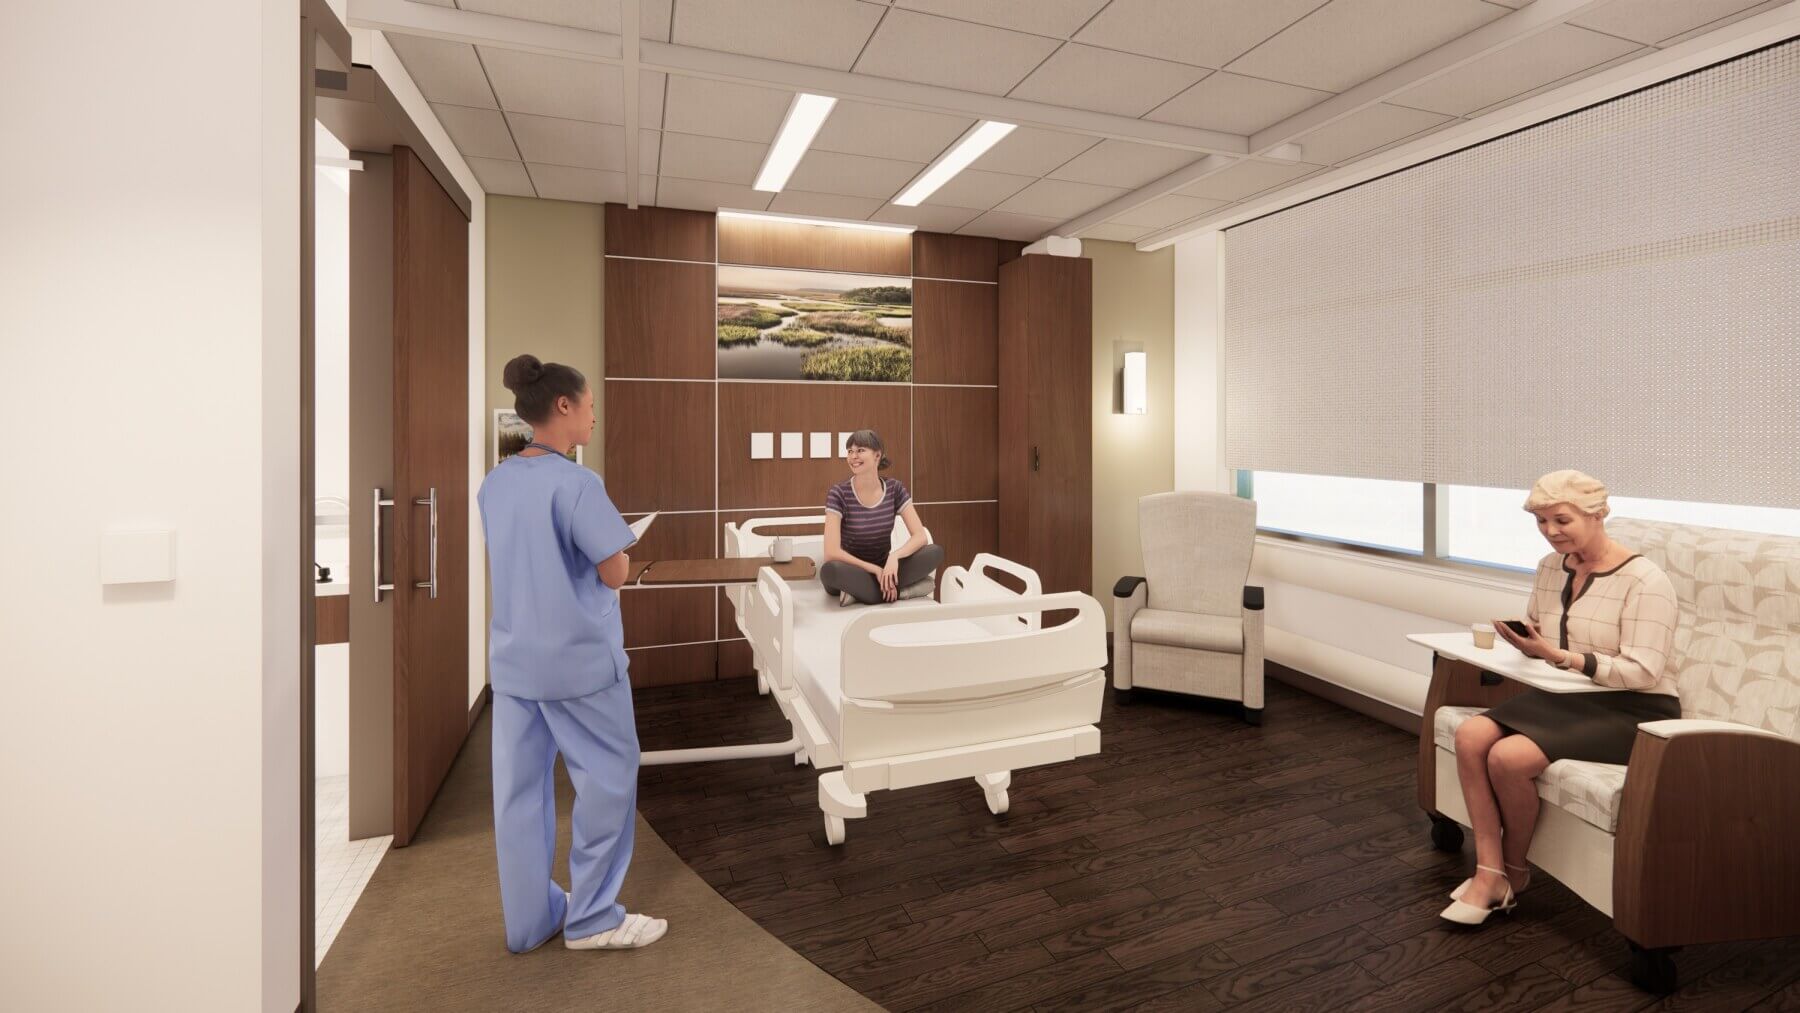 rehab patient room rendering